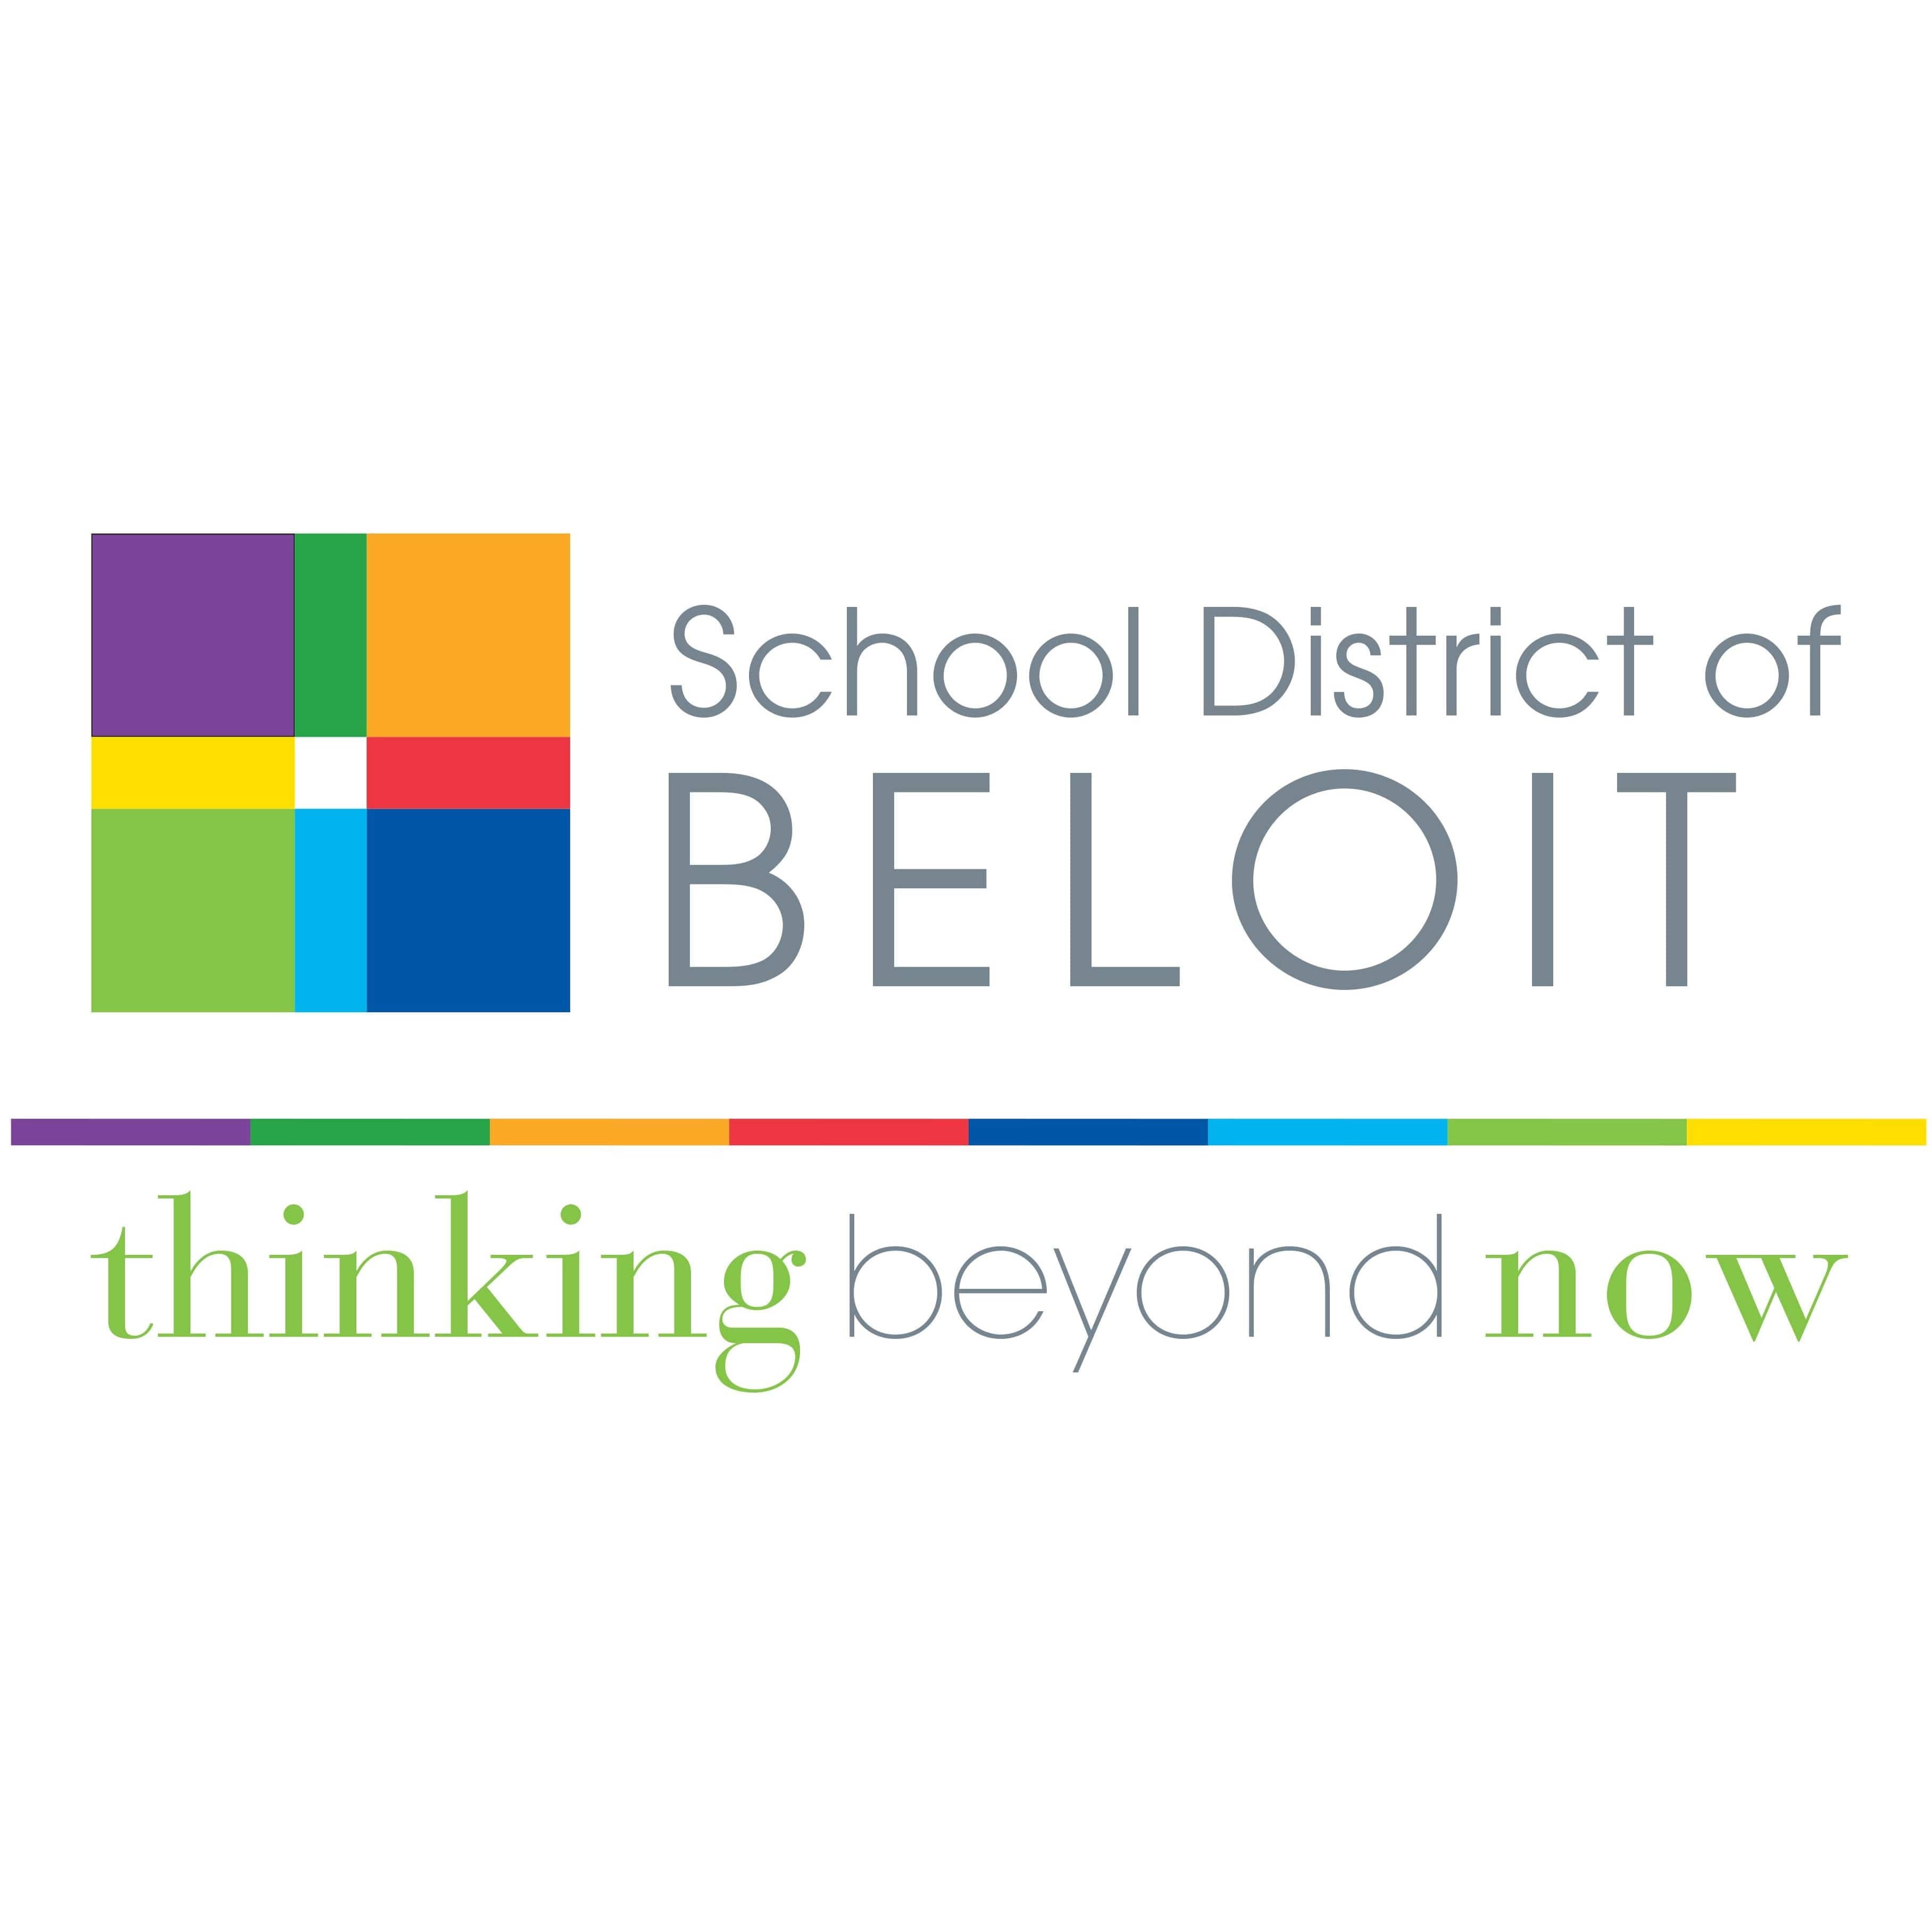 school-district-of-beloit-logo-full-square-15